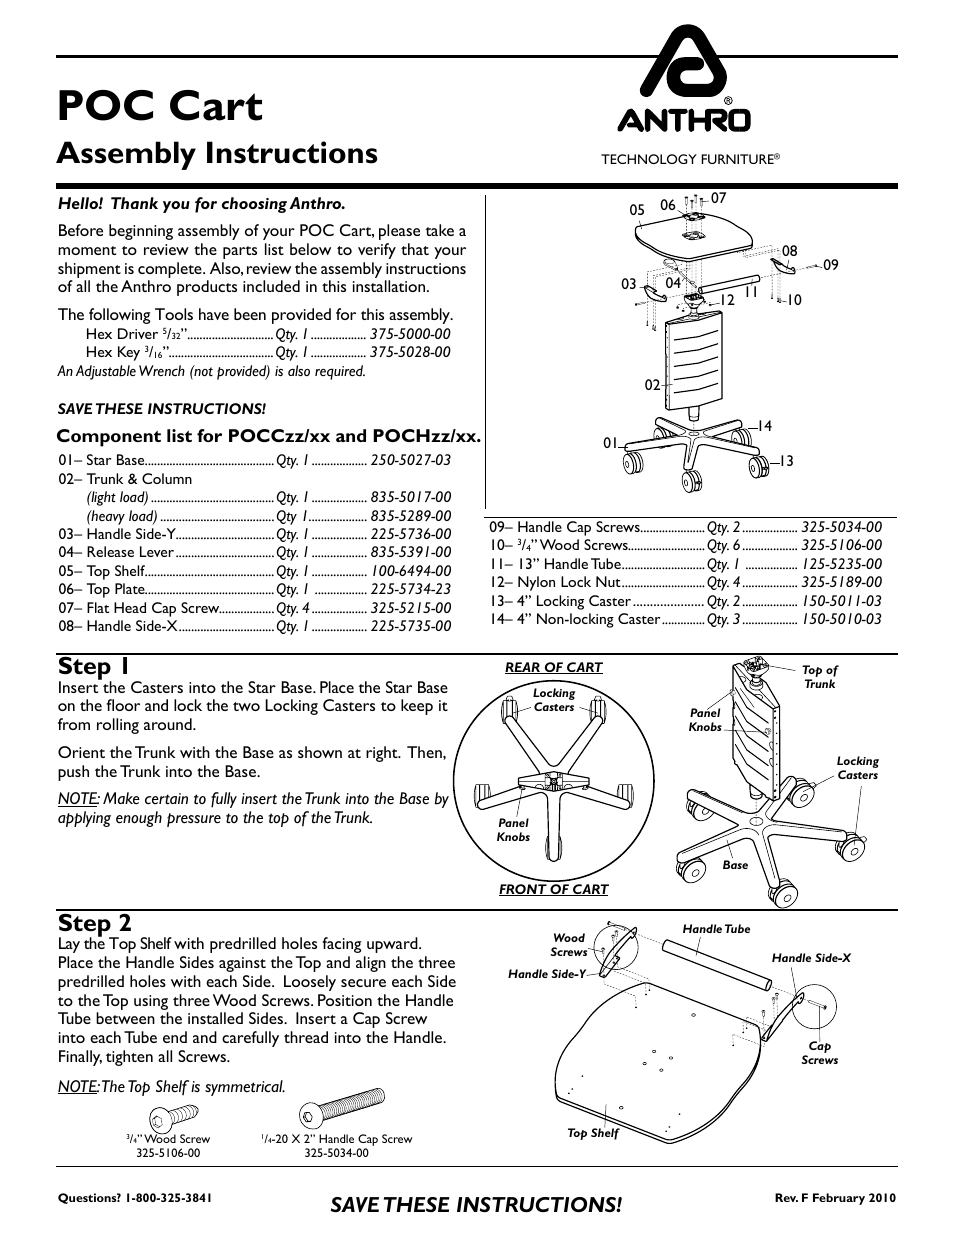 POC Cart Assembly Instructions